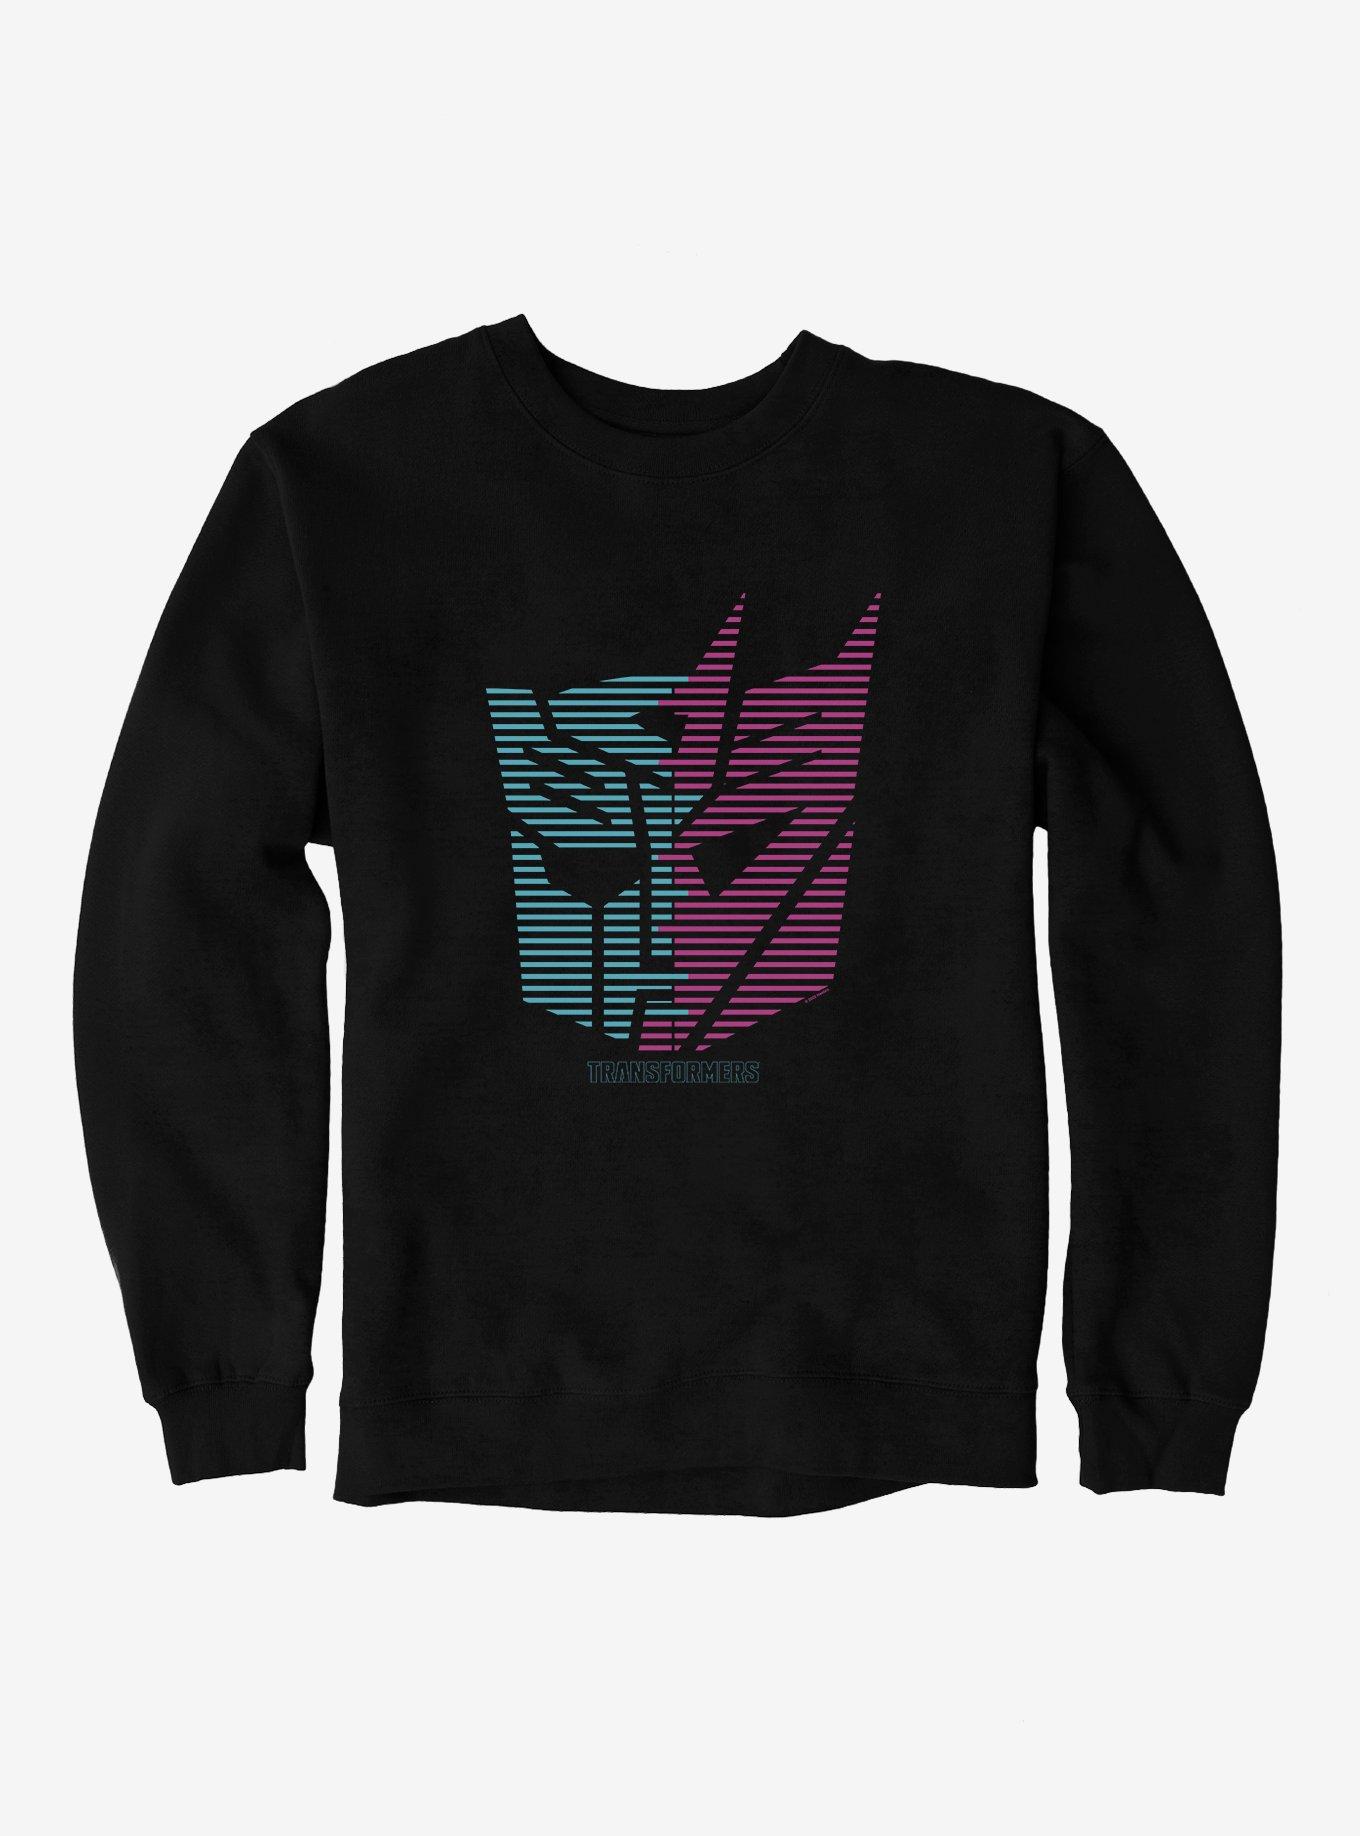 Transformers Autobot Decepticon Split Icon Sweatshirt